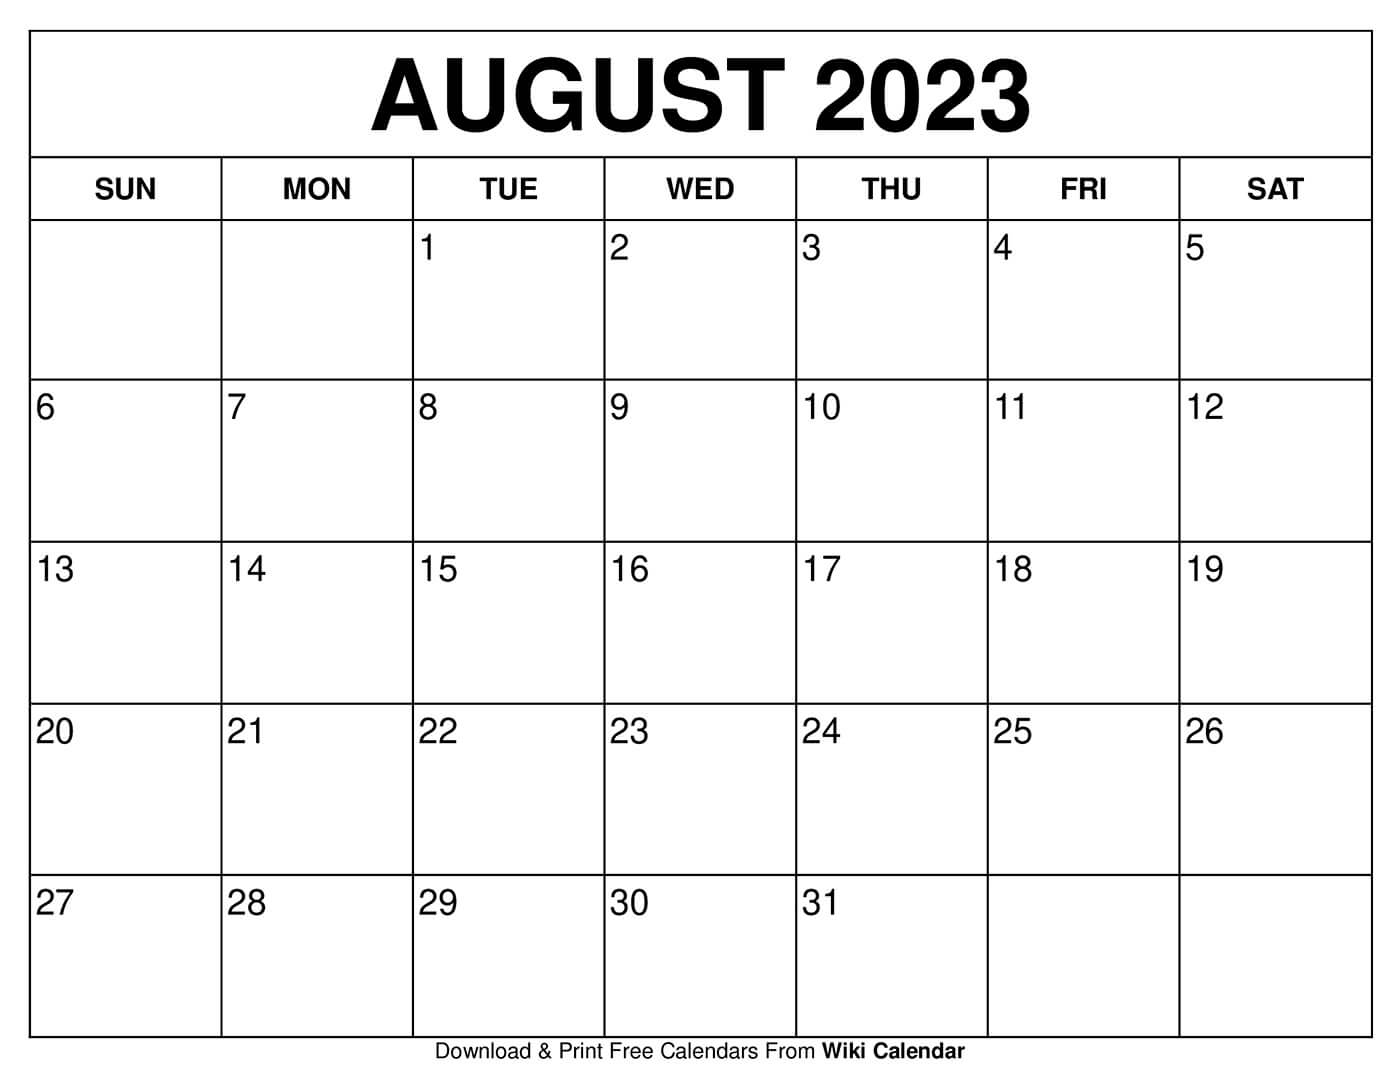 June 2022 Calendar To Print Free Printable August 2022 Calendars - Wiki Calendar